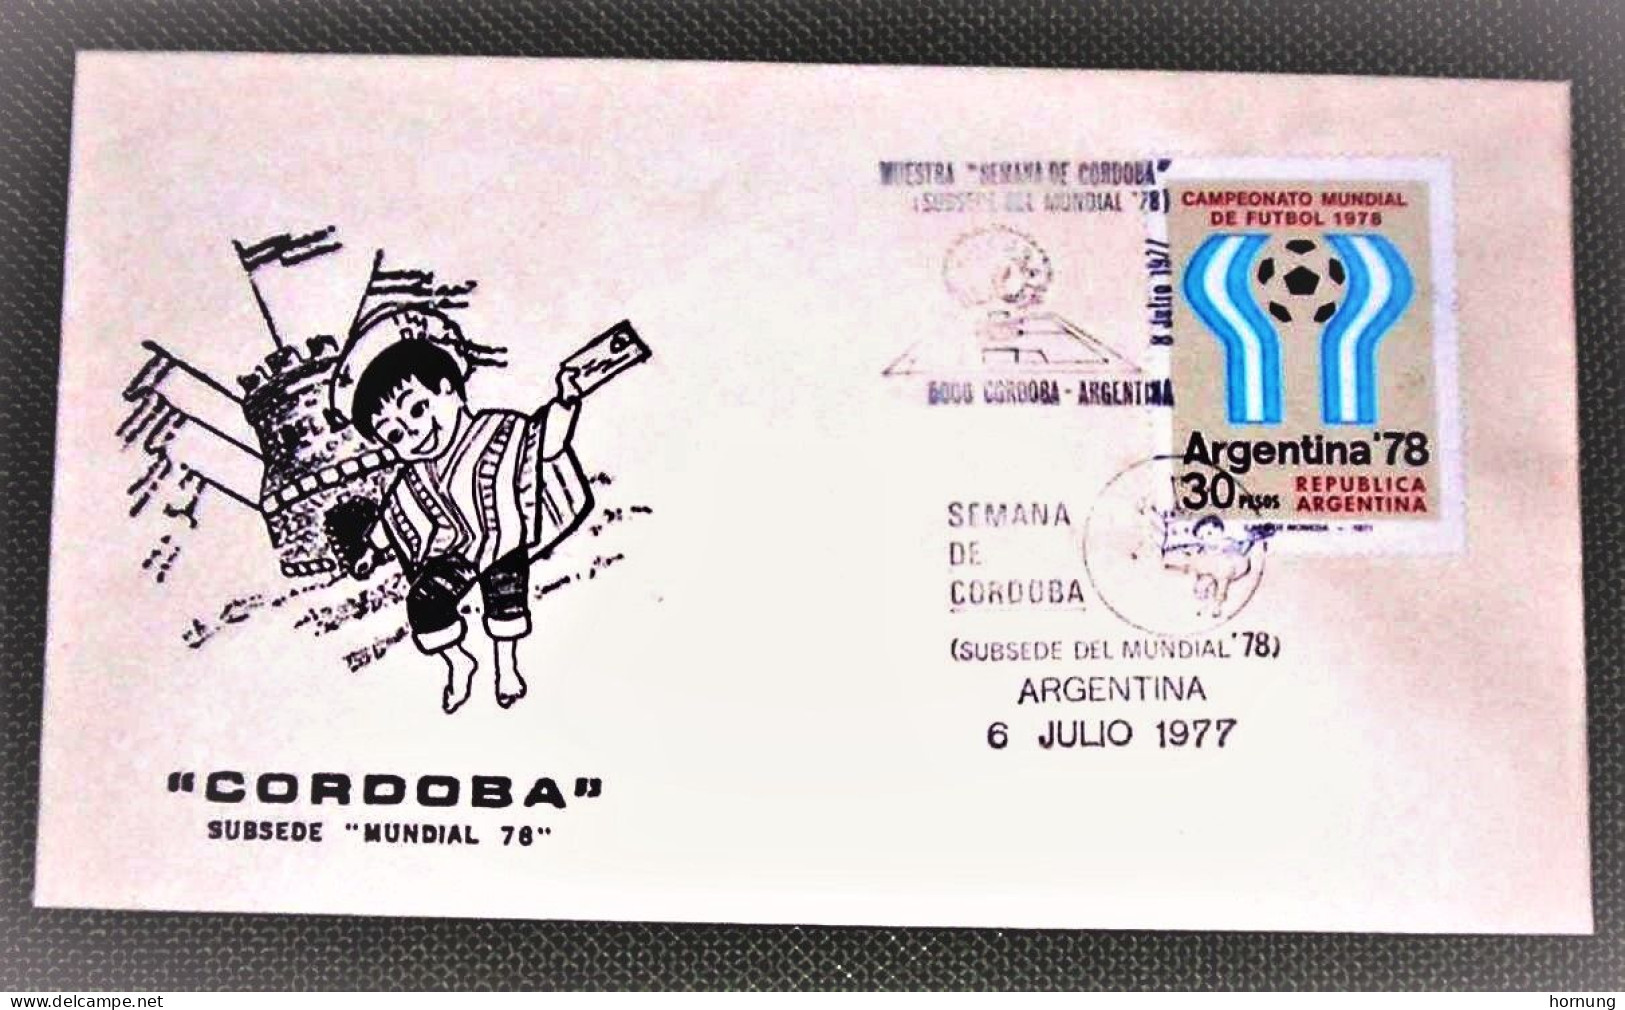 Argentina,1978,CORDOBA Subsede "MUNDIAL 78 ", ARGENTINA  6 JULIO 1977. - Oblitérés